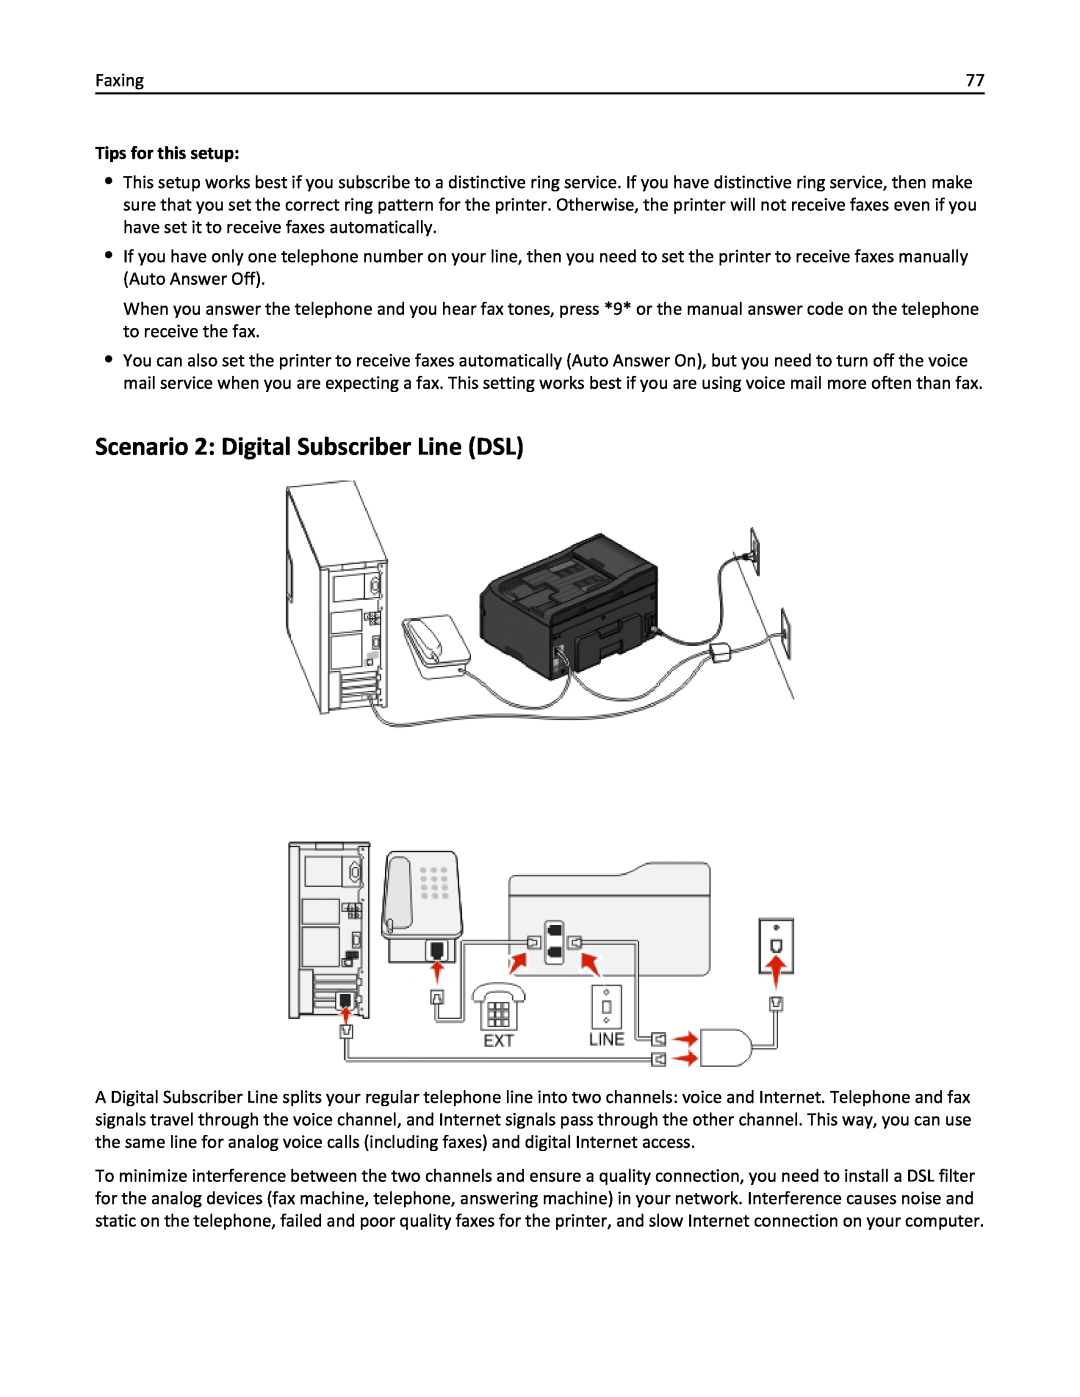 Lexmark 200, 20E manual Scenario 2: Digital Subscriber Line DSL, Tips for this setup 